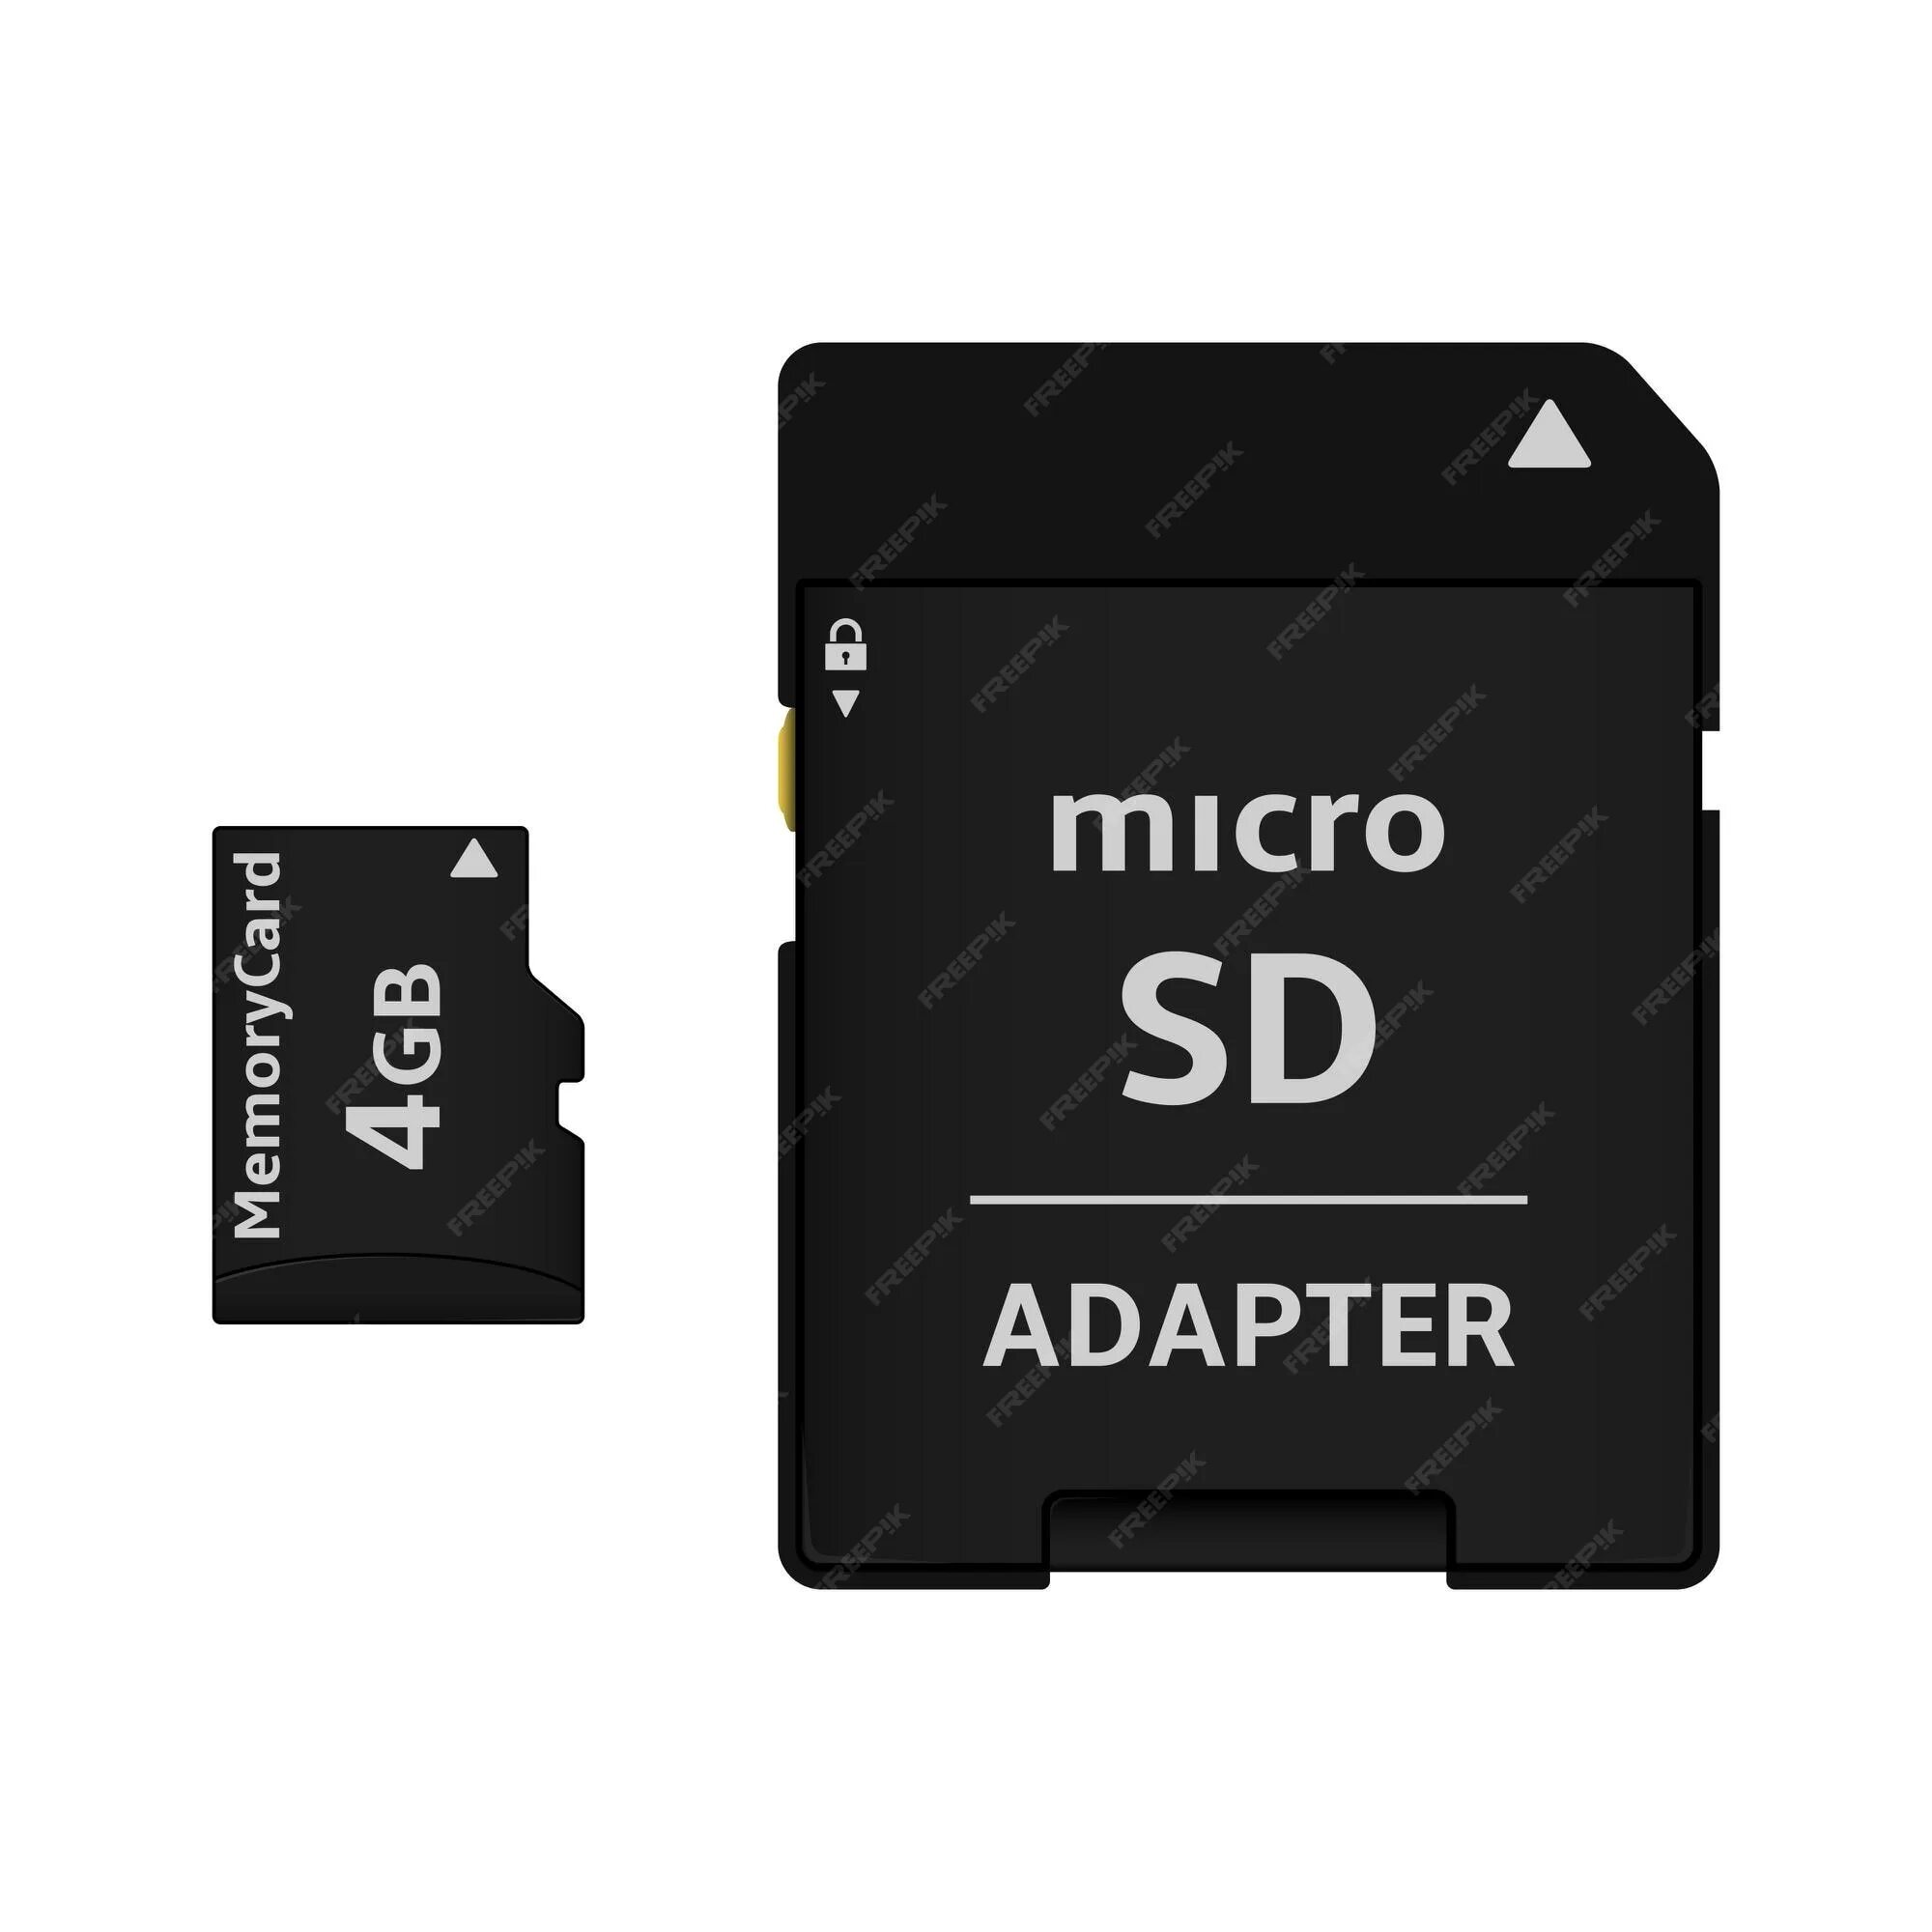 Микро недорого. Адаптер микро СД на СД. Адаптер для SD карты. Адаптер SD MICROSD. Переходник на карту памяти микро СД.